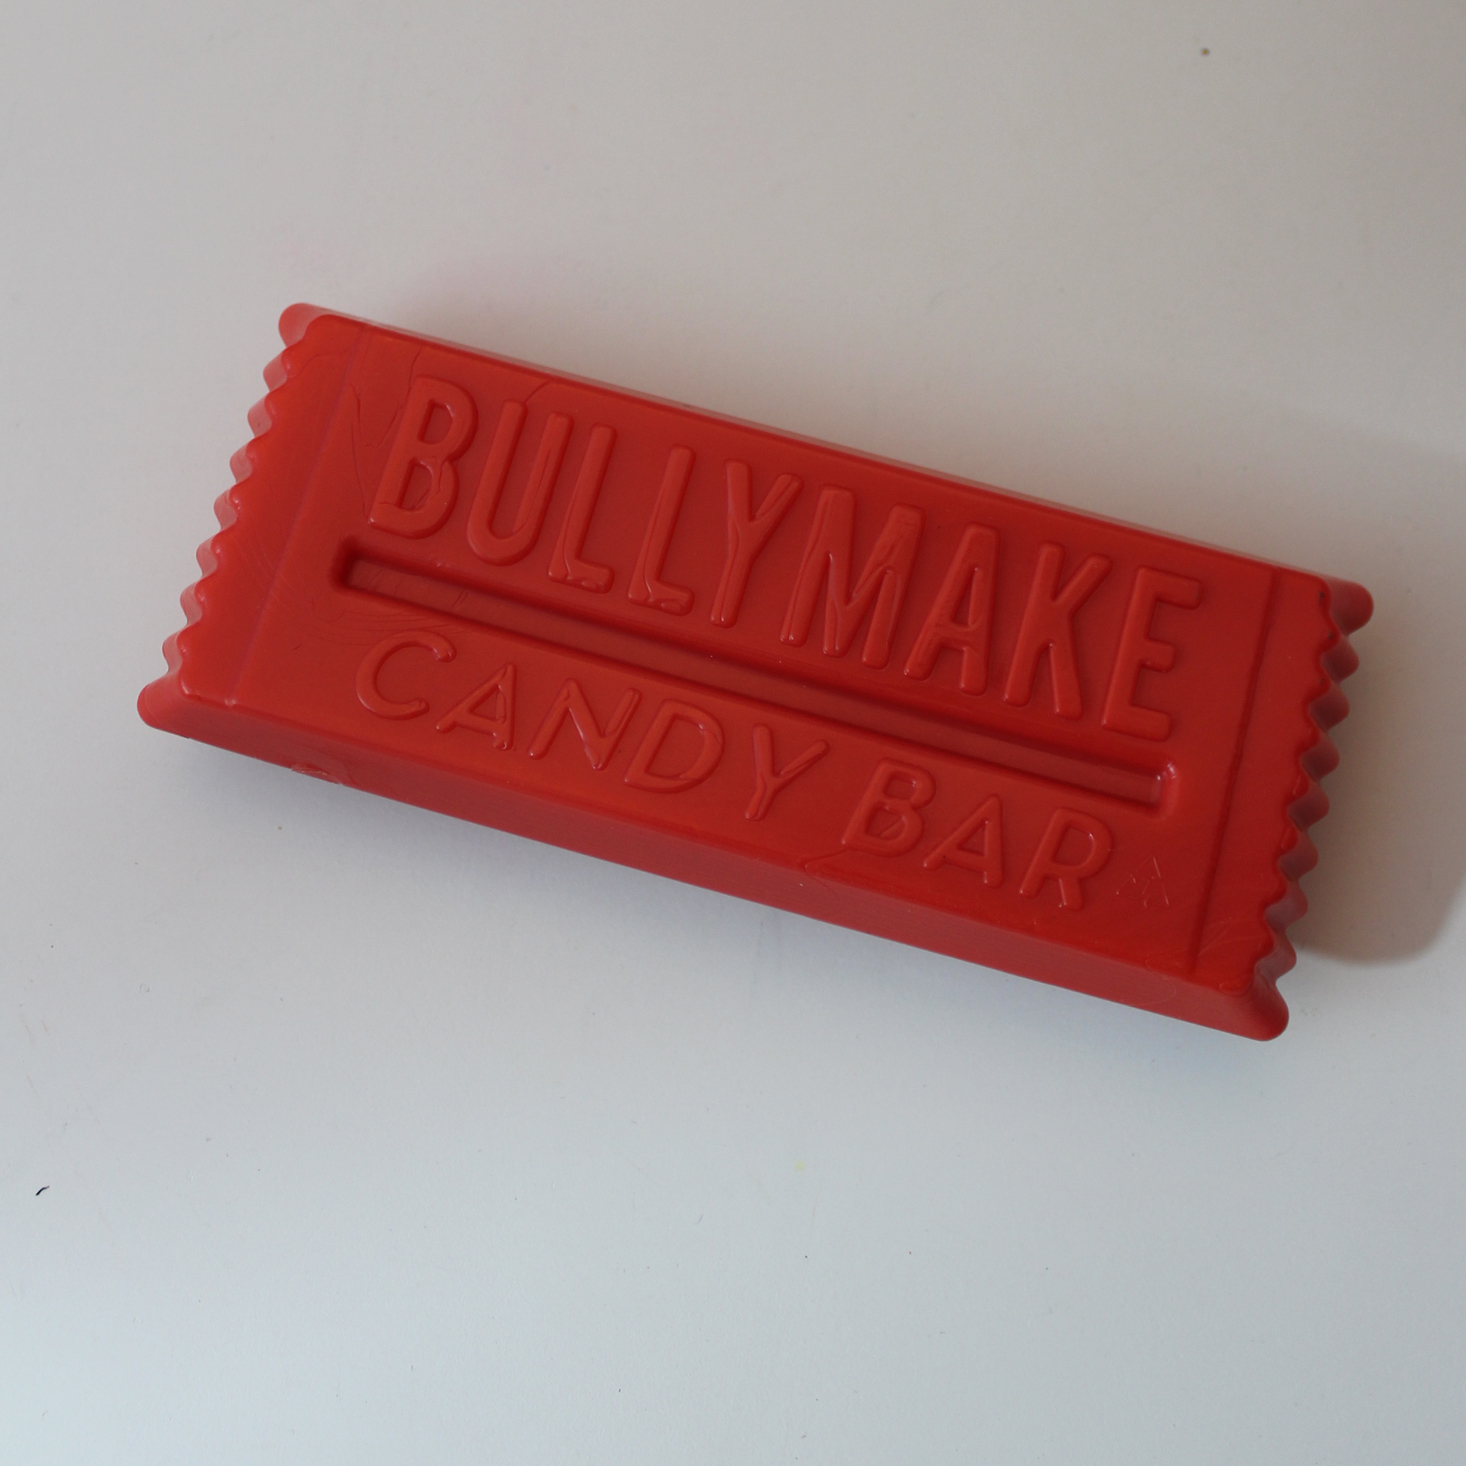 Bullymake Box October 2019 Candy